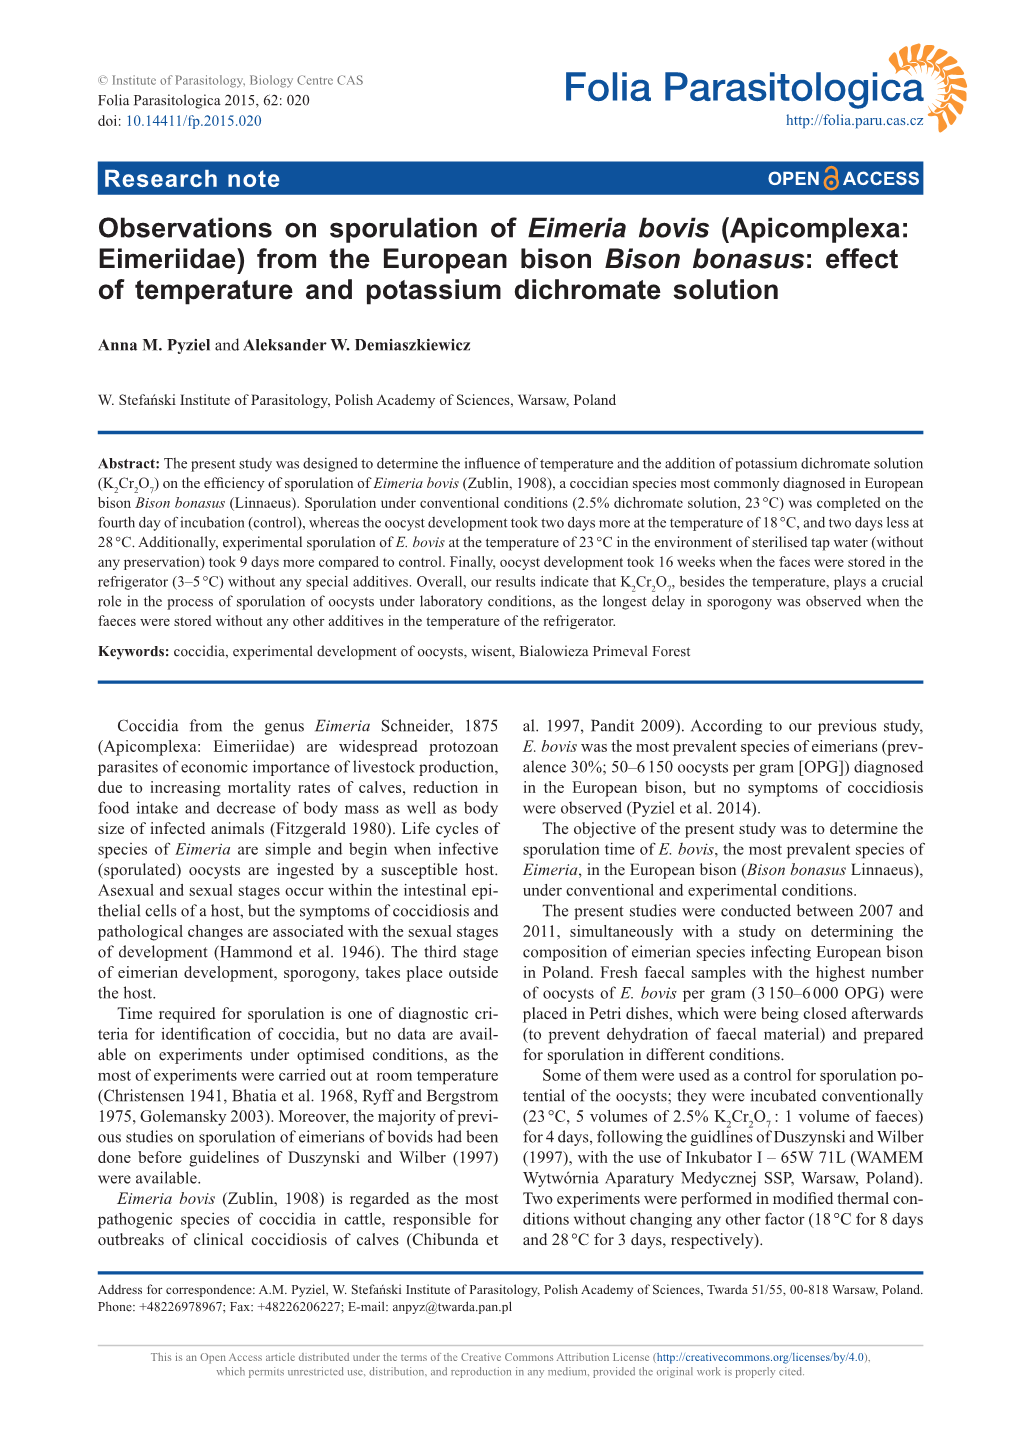 Observations on Sporulation of Eimeria Bovis (Apicomplexa: Eimeriidae) from the European Bison Bison Bonasus: Effect of Temperature and Potassium Dichromate Solution